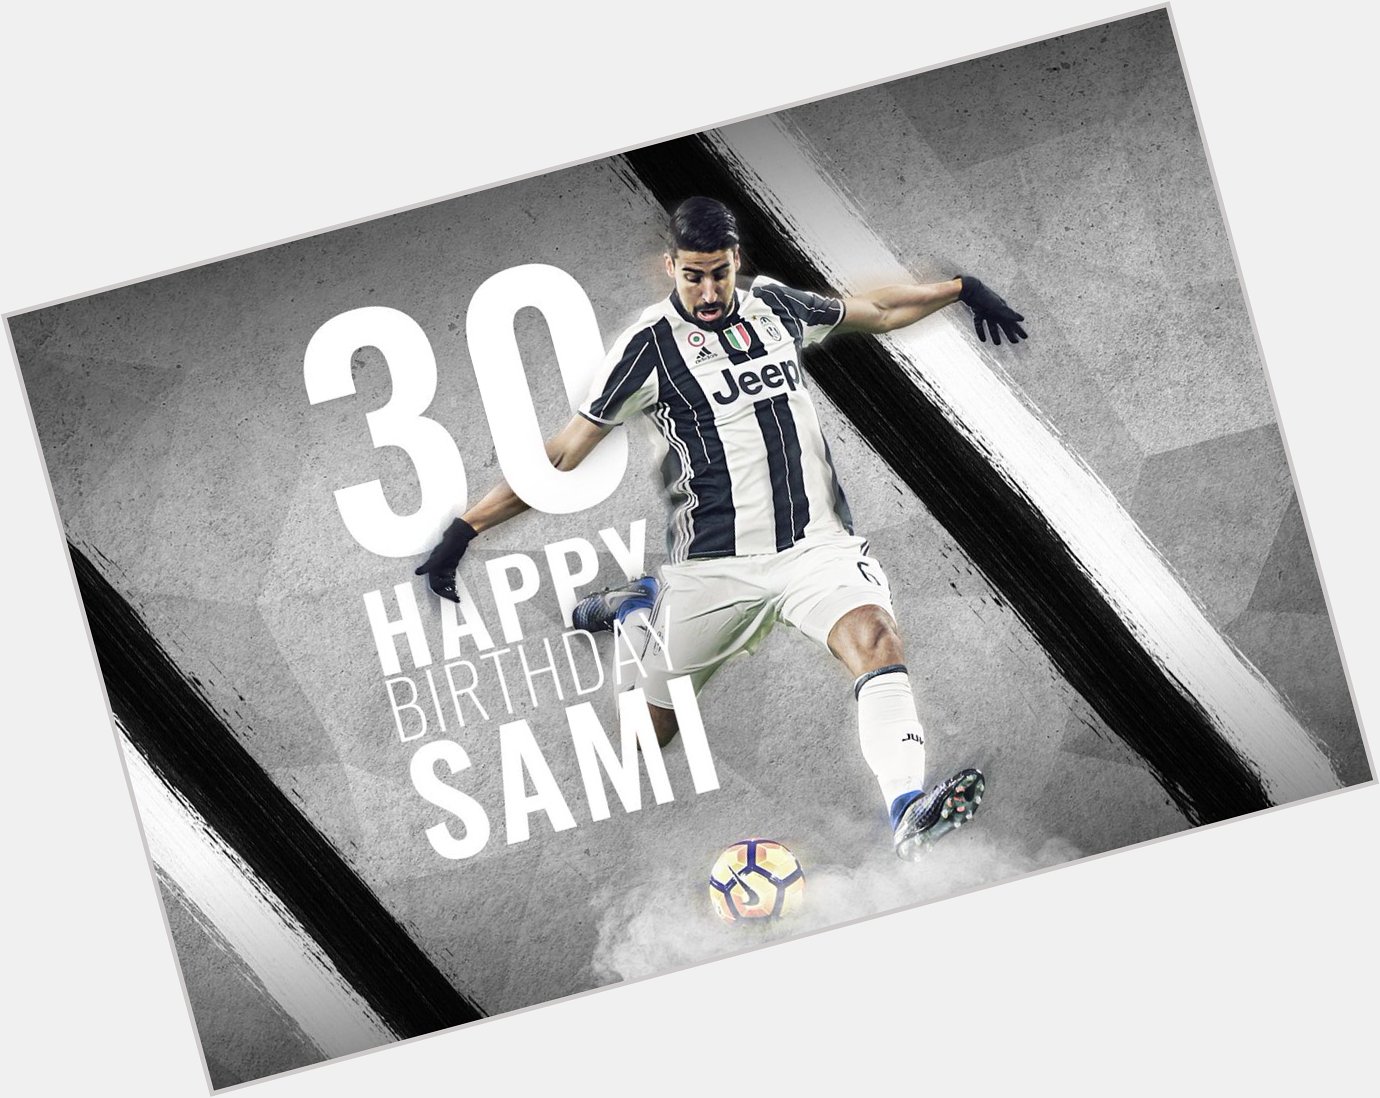 Event:Happy birthday, Sami!  